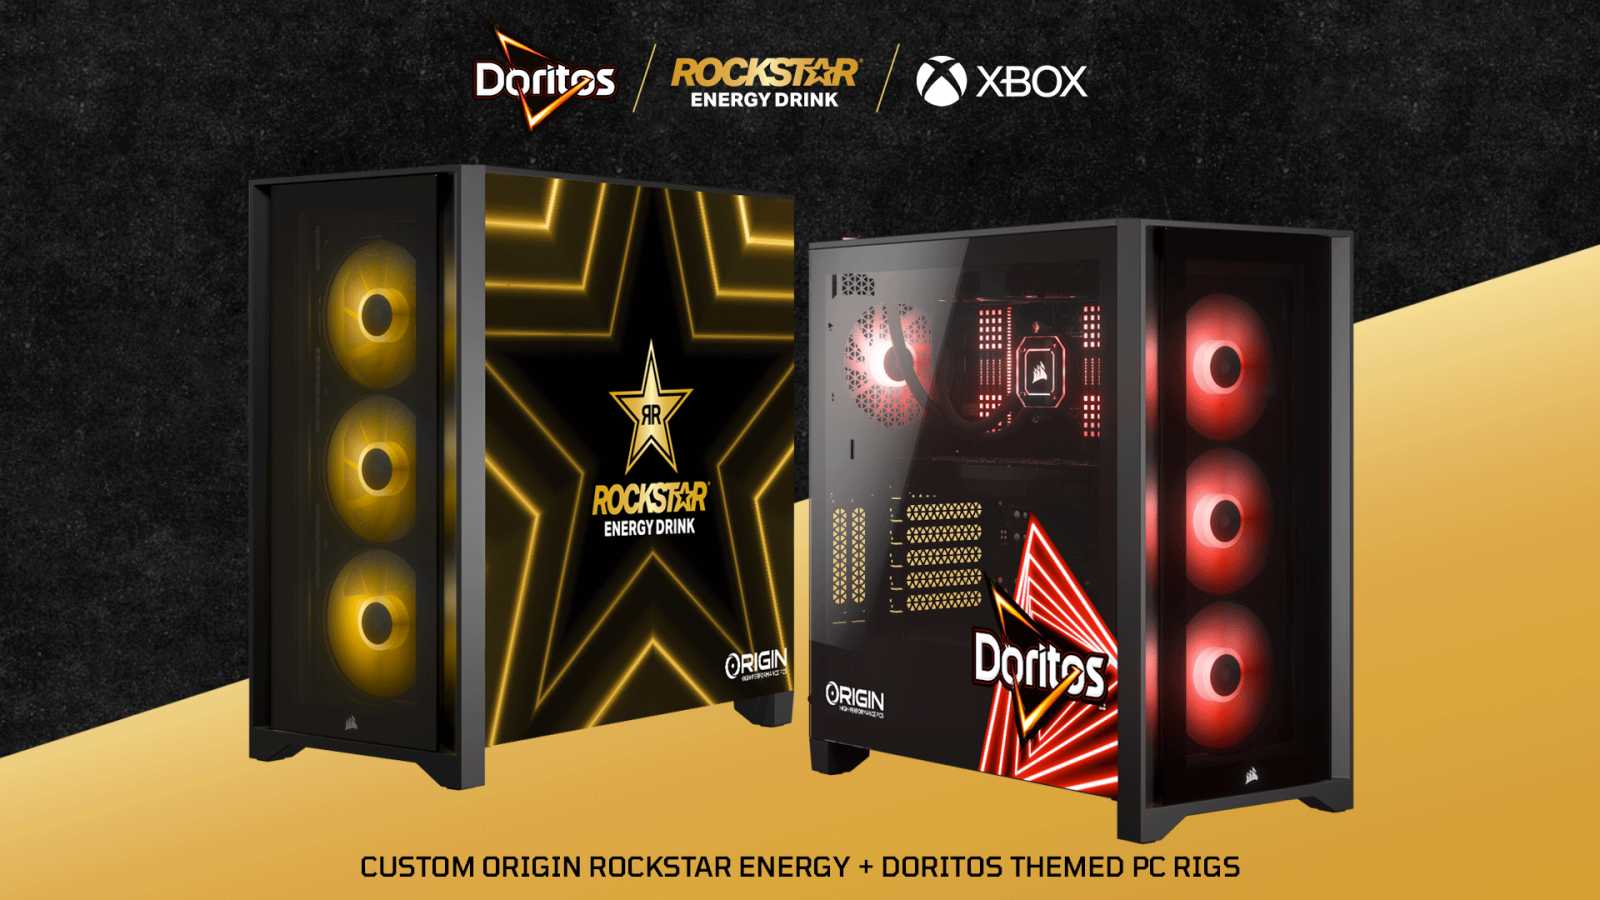 Xbox|Doritos|Rockstar